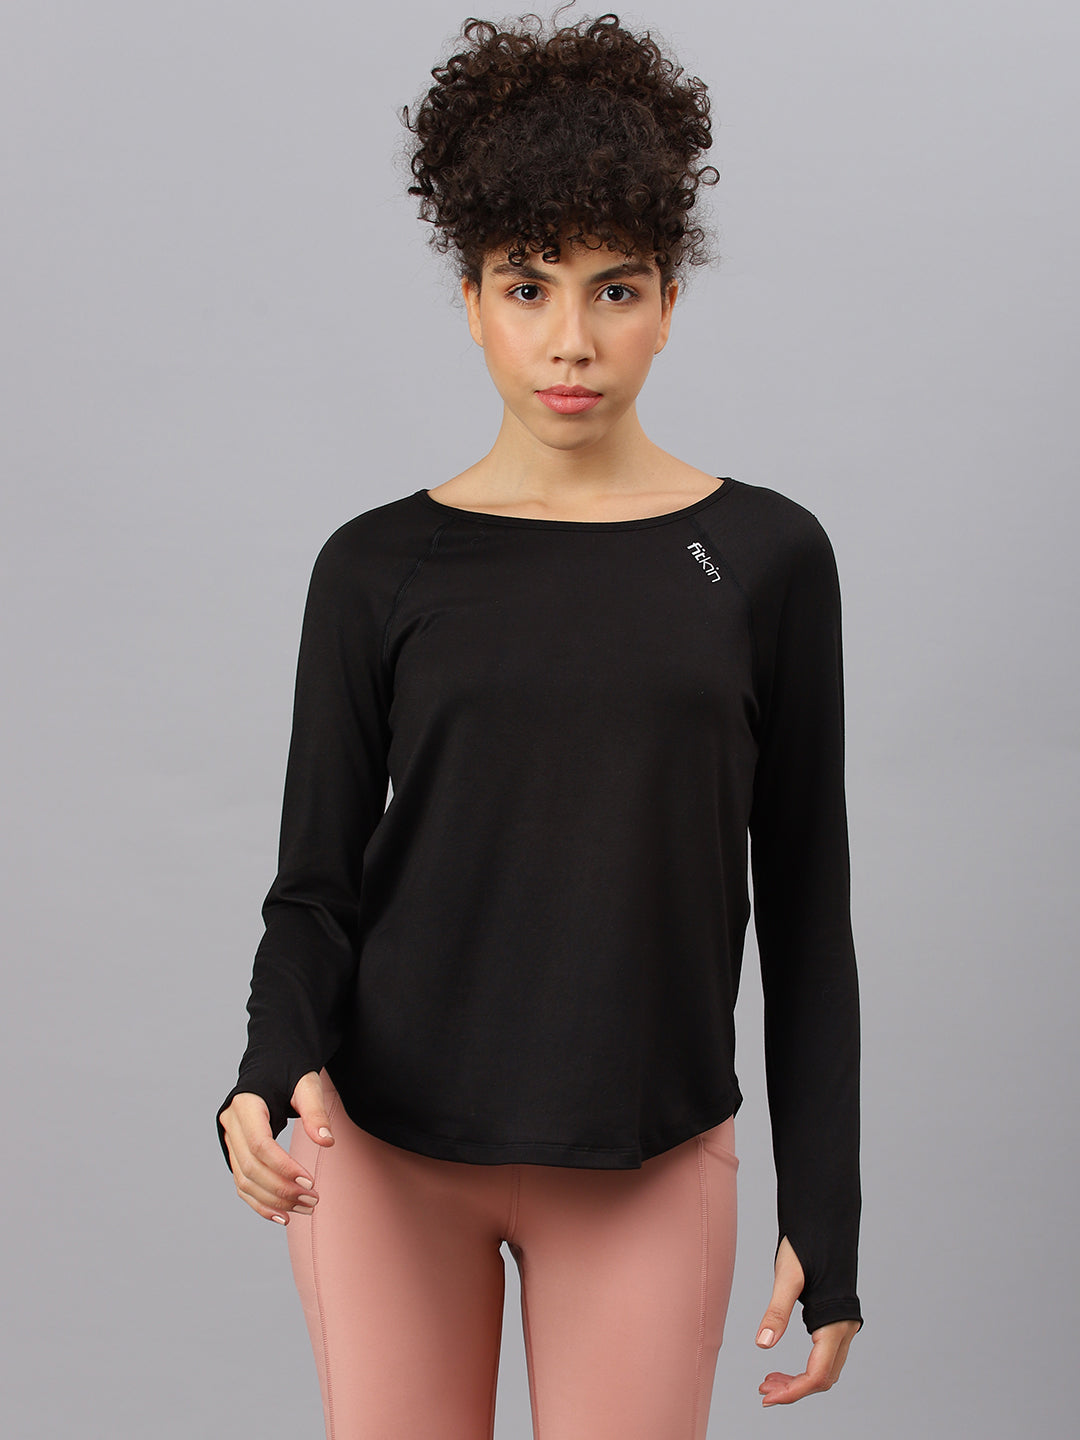 Fitkin women's black round neck back laser cut design full sleeves t-shirt